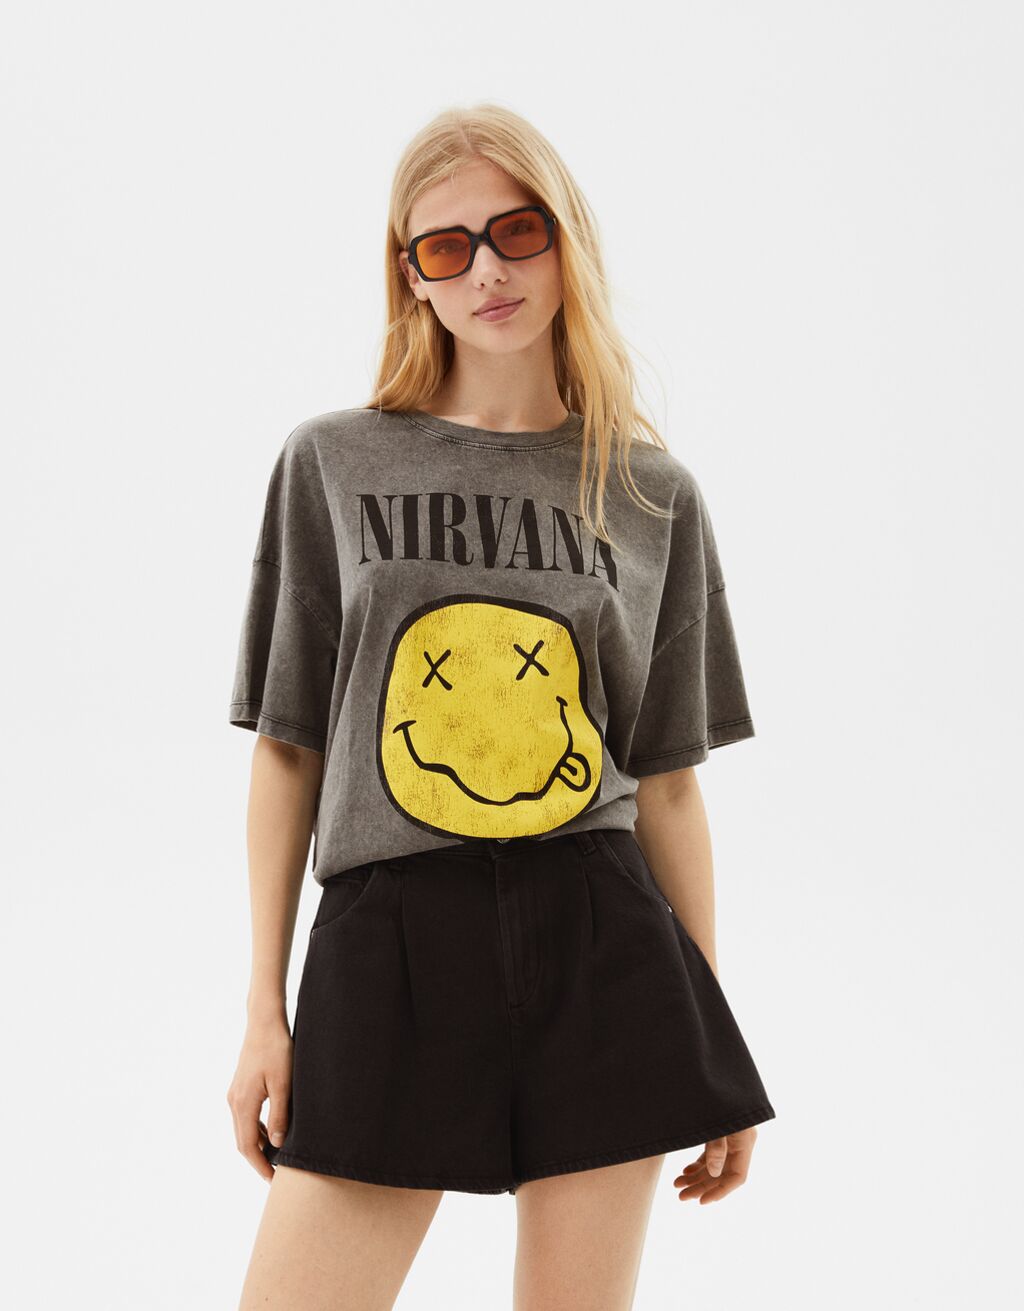 Camiseta manga curta Nirvana estampado happy face